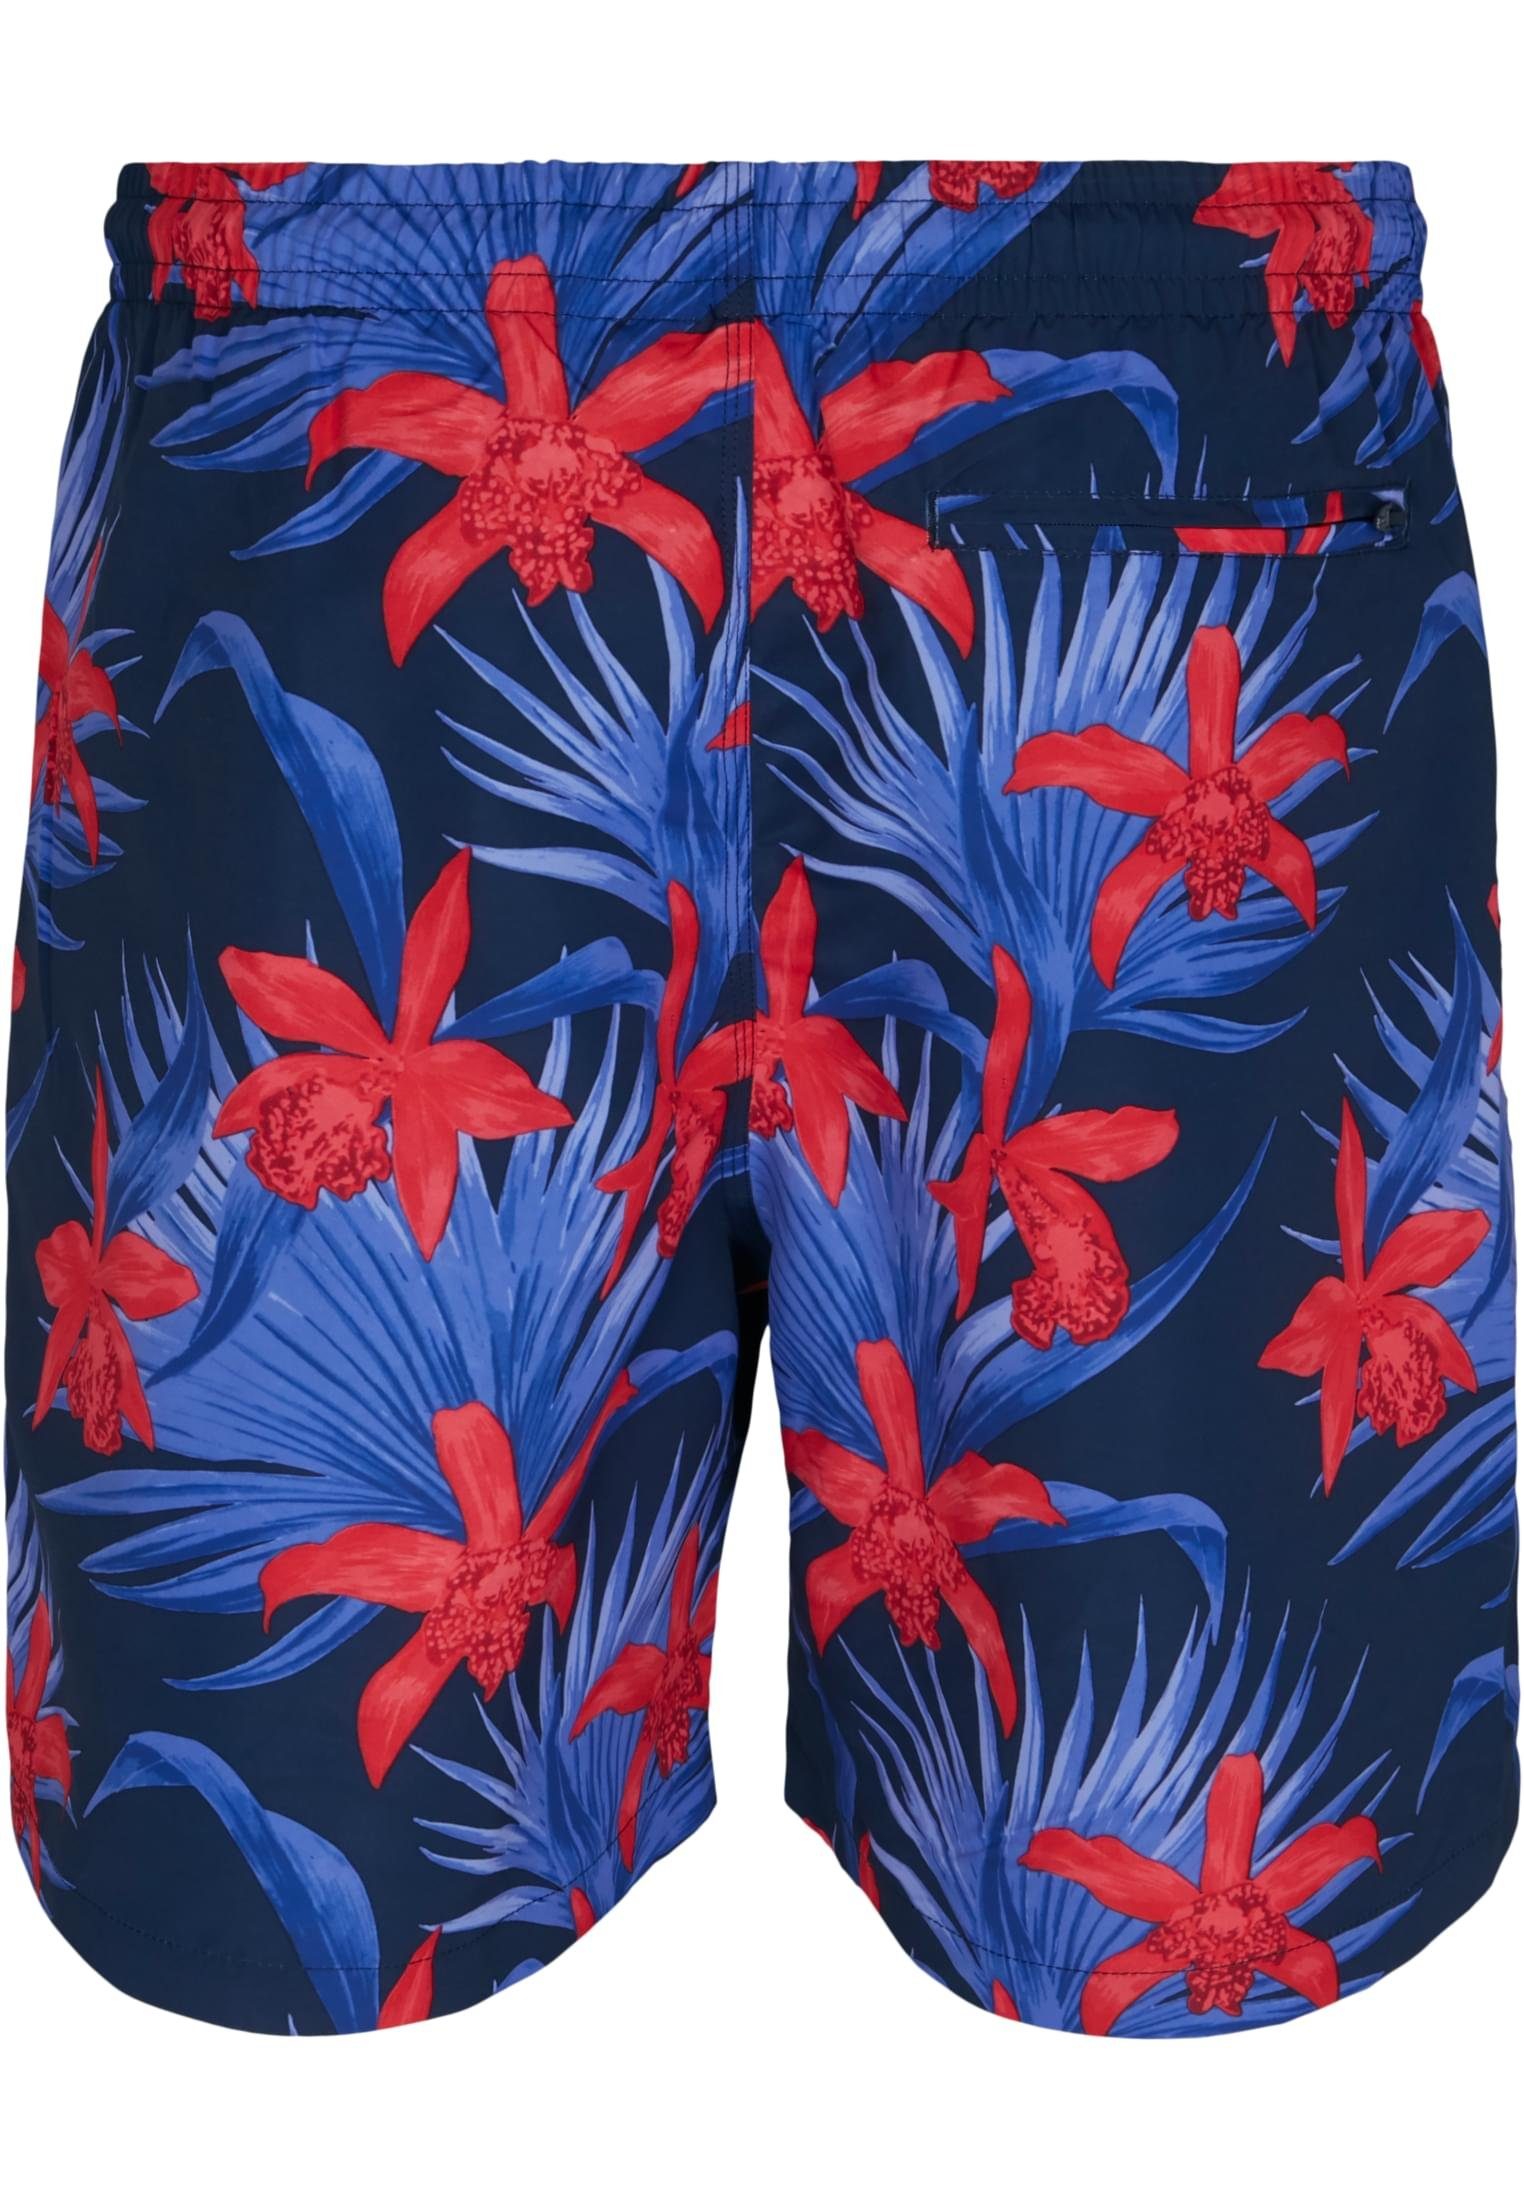 Pattern blue/red CLASSICS Swim Herren URBAN Shorts Badeshorts